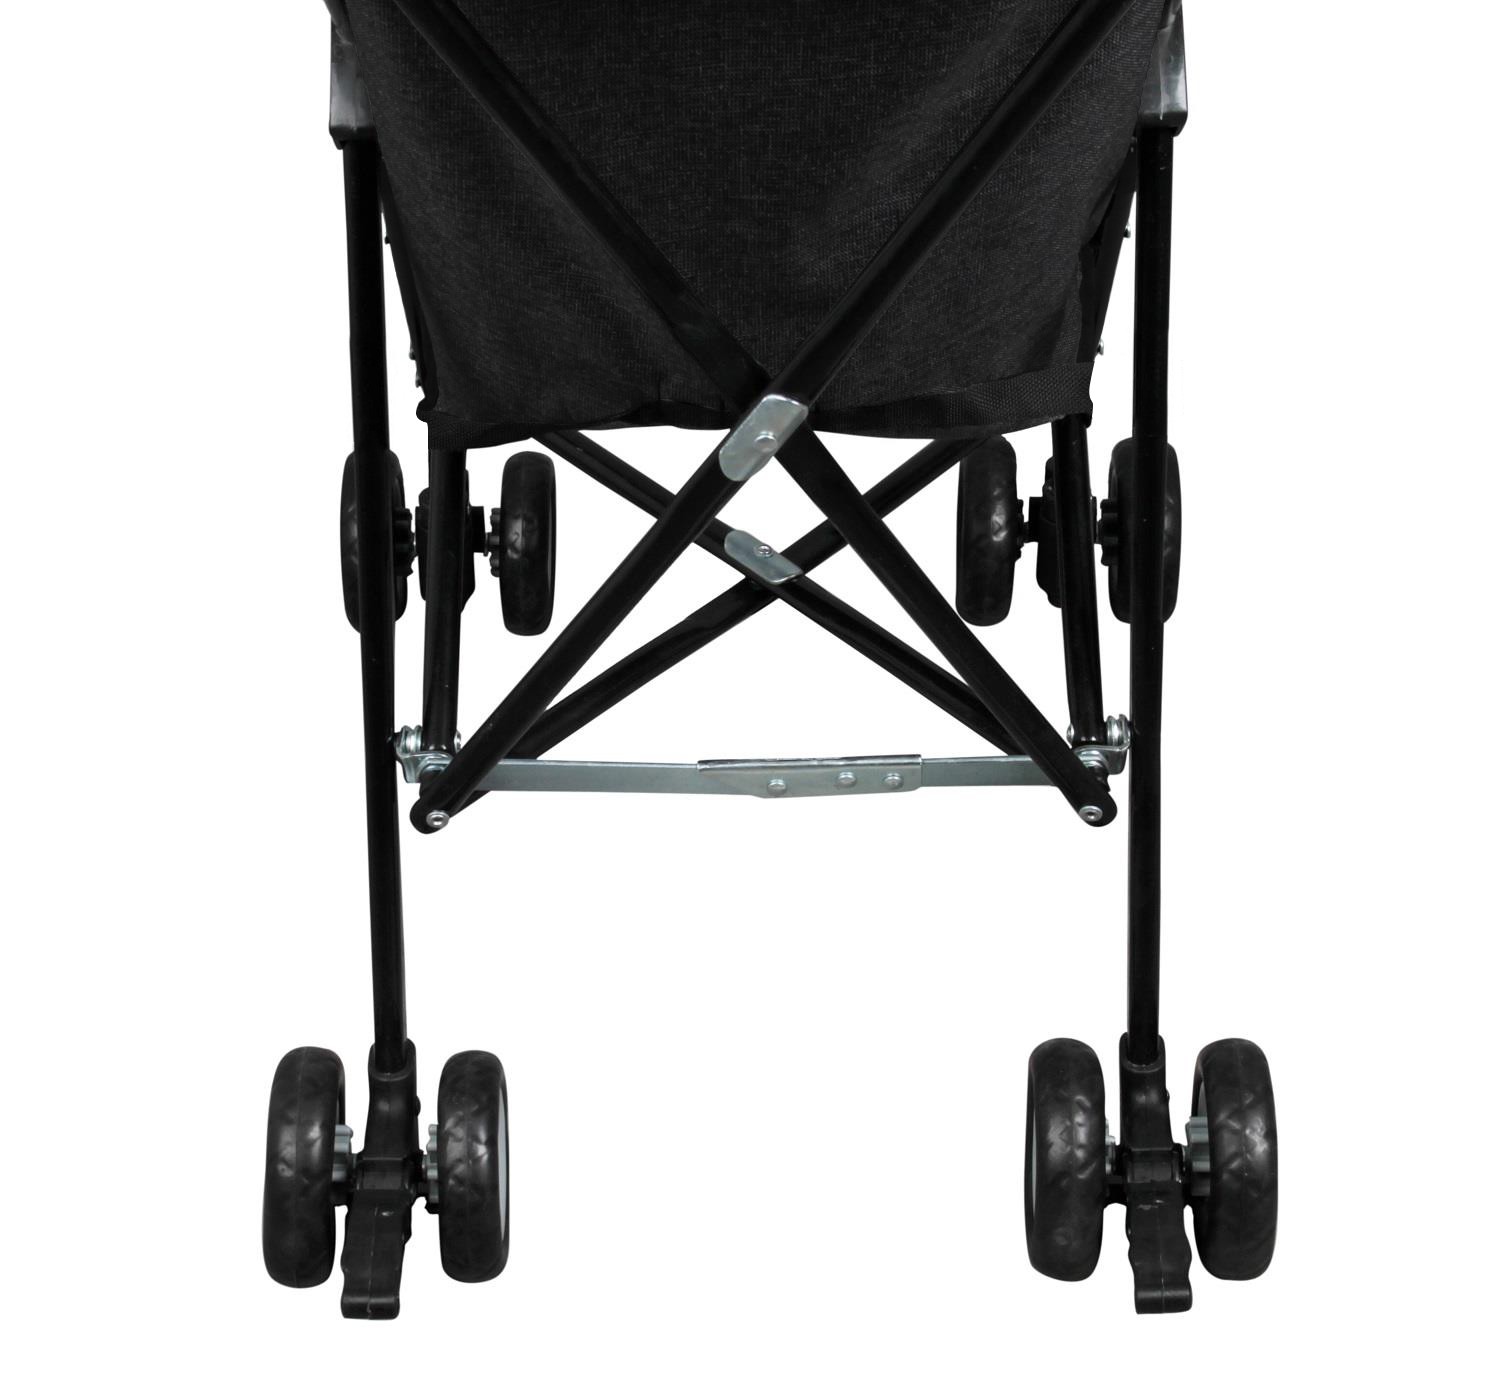 Comfymax Comfort II Baston Bebek Arabası - Siyah